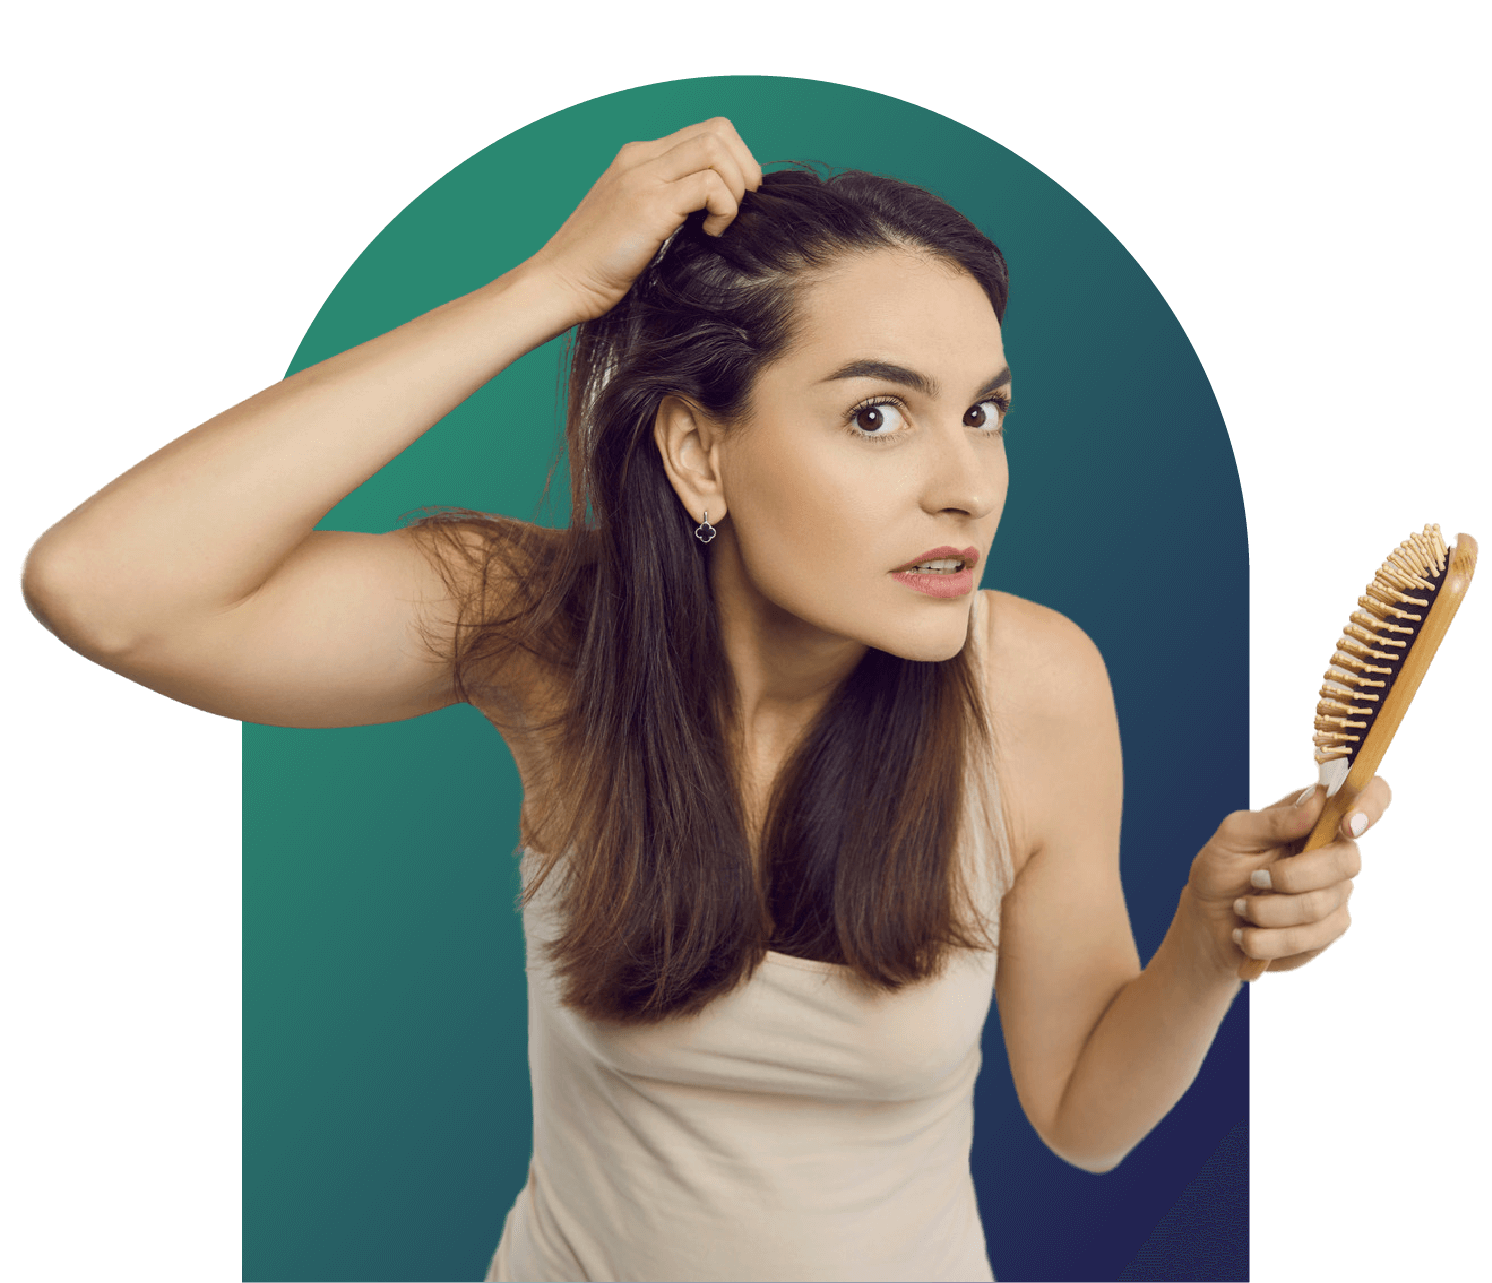 Hair loss treatments for women